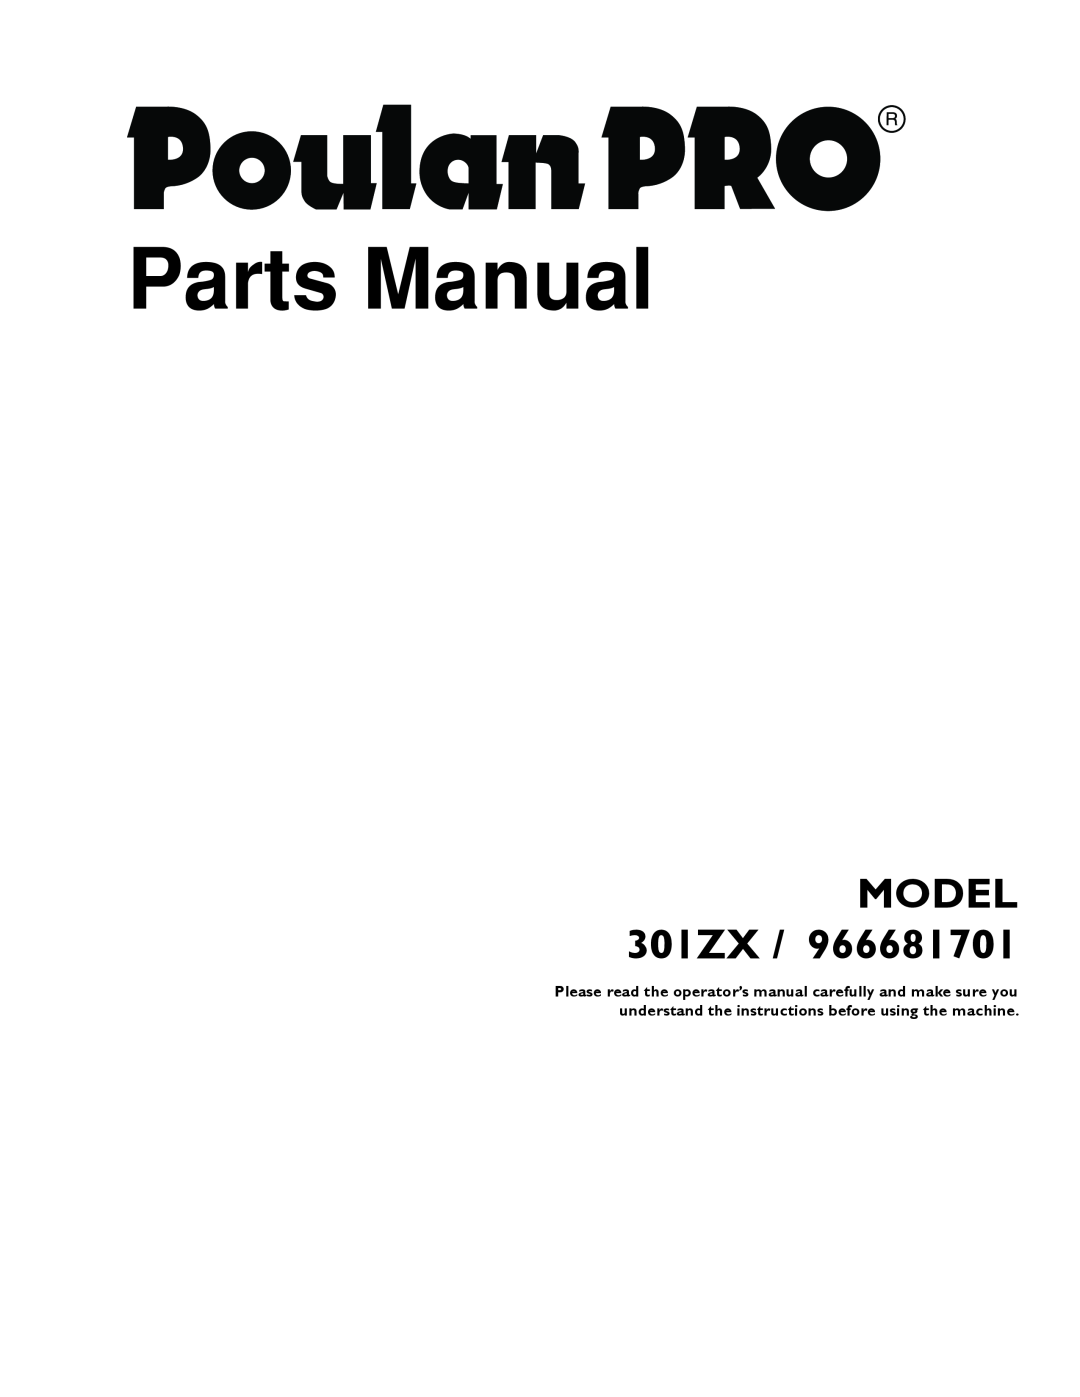 Poulan manual Parts Manual, MODEL 301ZX 